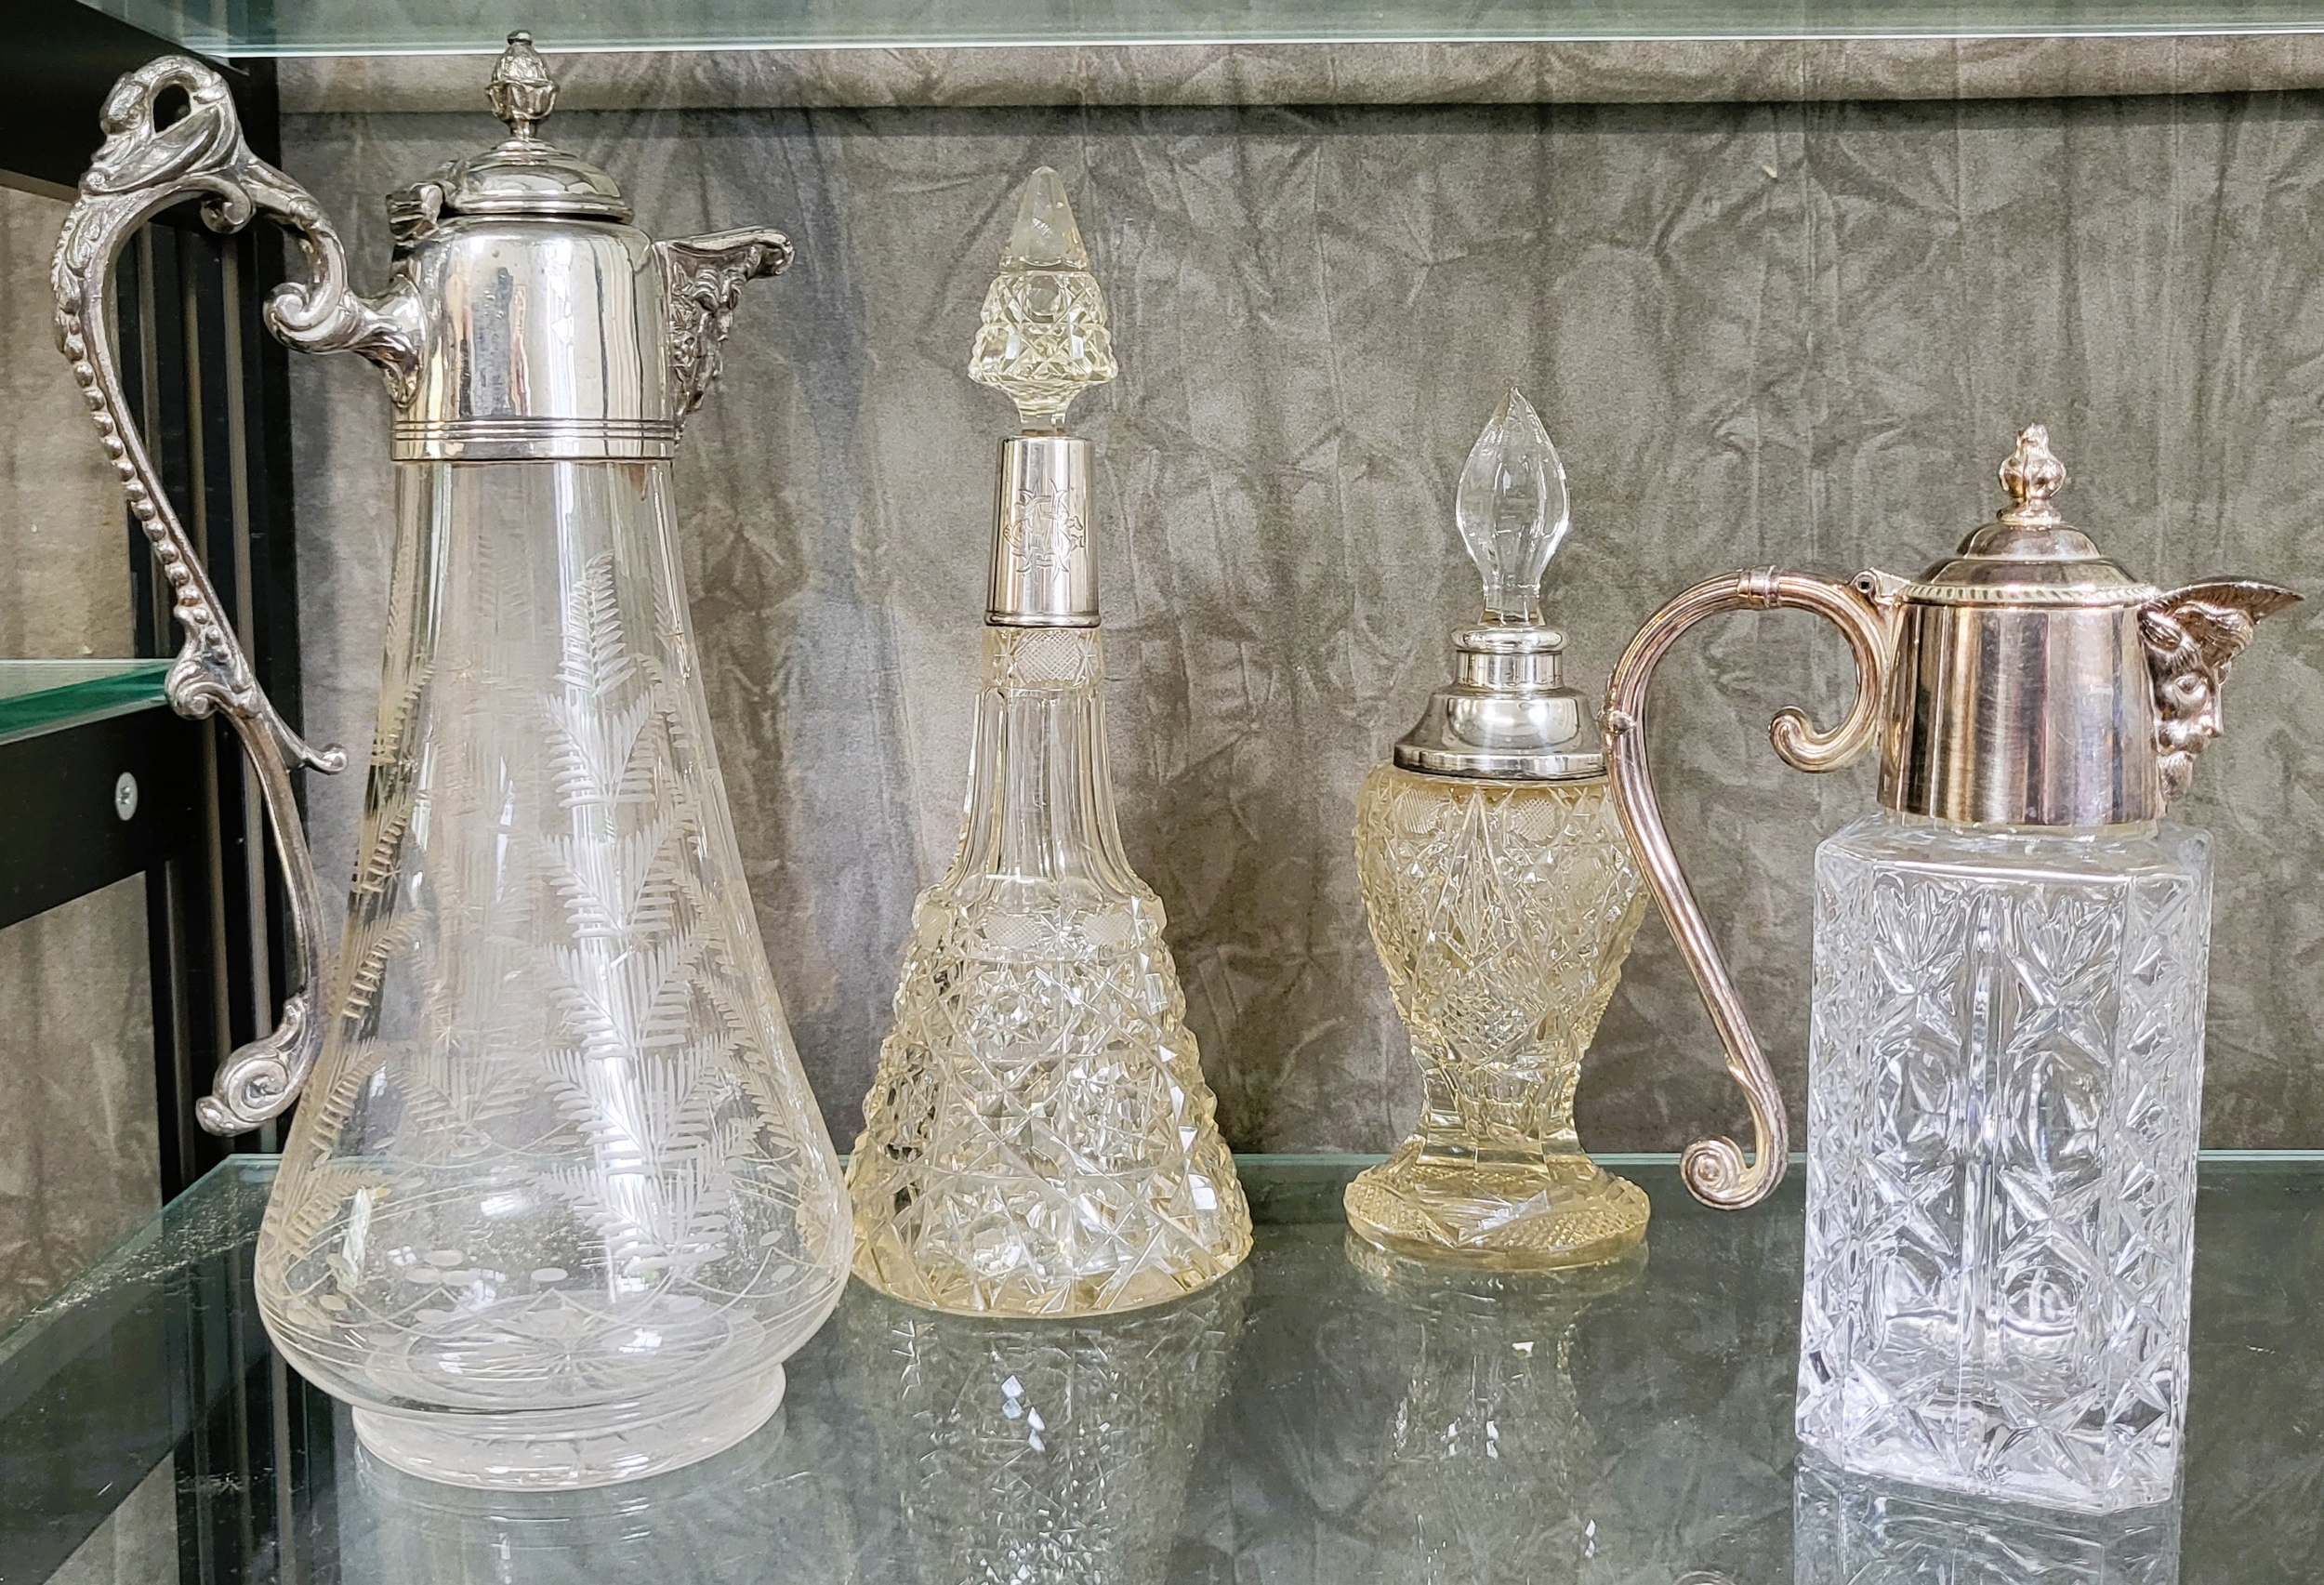 A cut glass and silver plate claret jug, a silver plate and cut glass decanter, and two cut glass